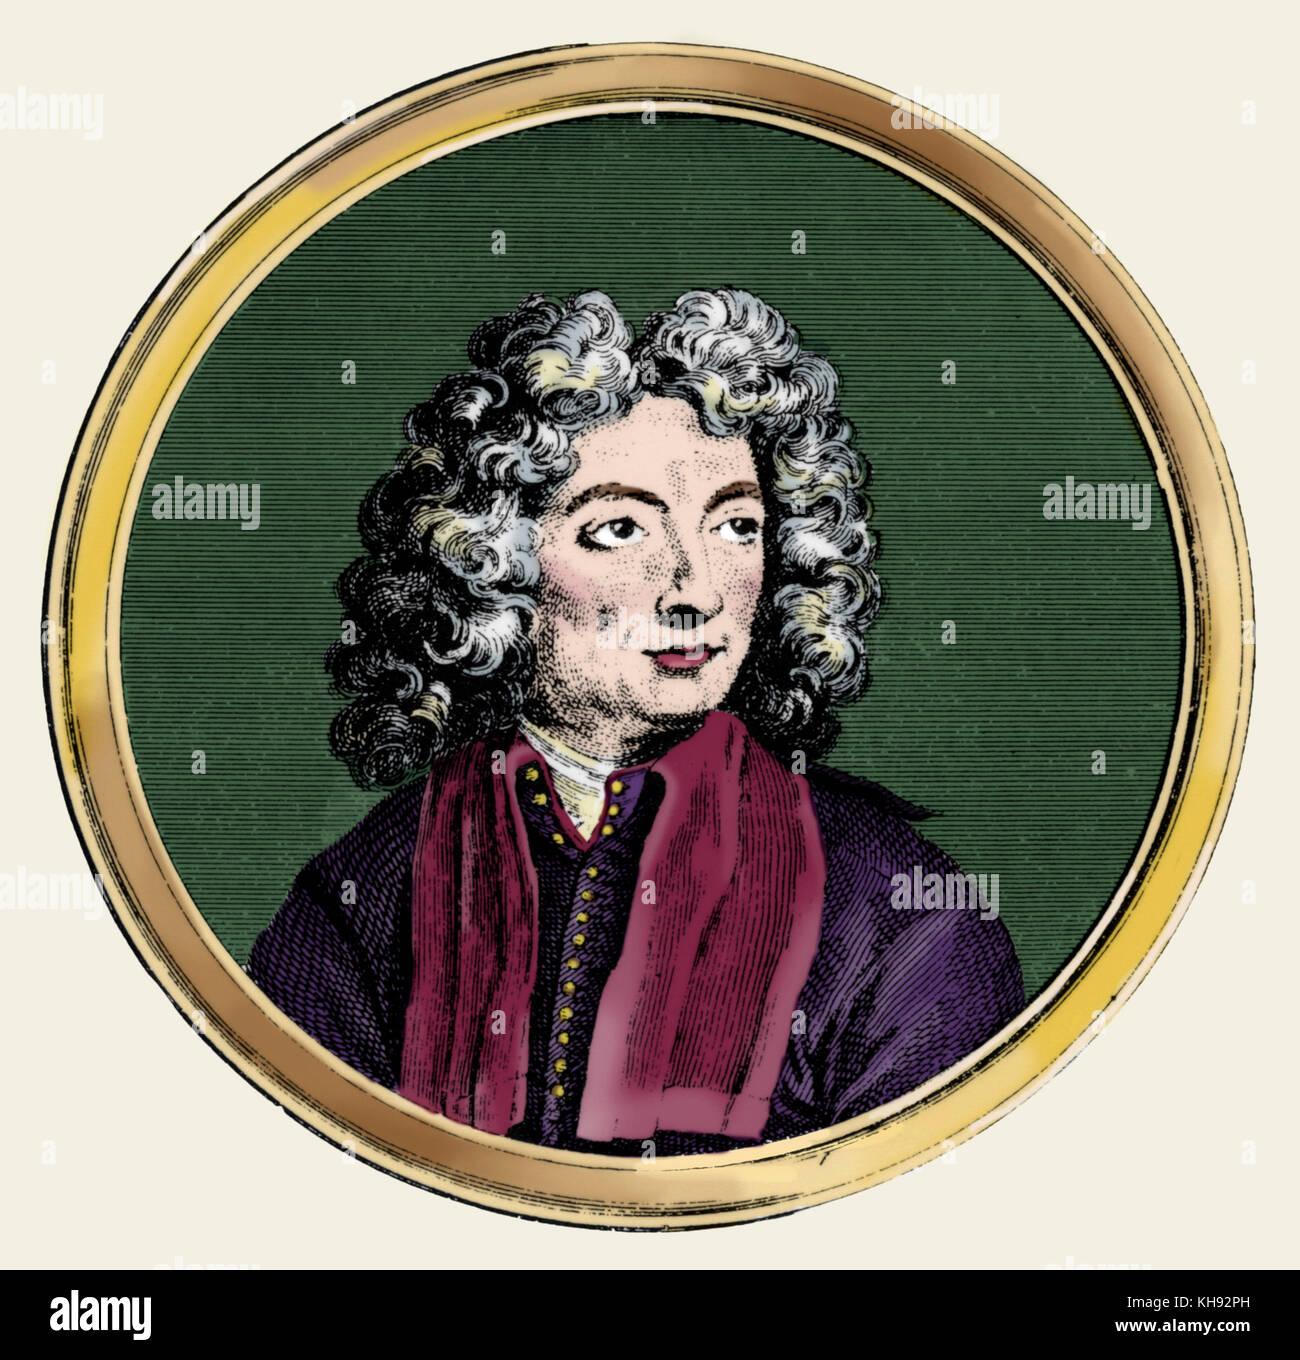 Arcangelo Corelli portrait. Italian composer & violinist. 17 February 1653 - 8 January 1713 Stock Photo